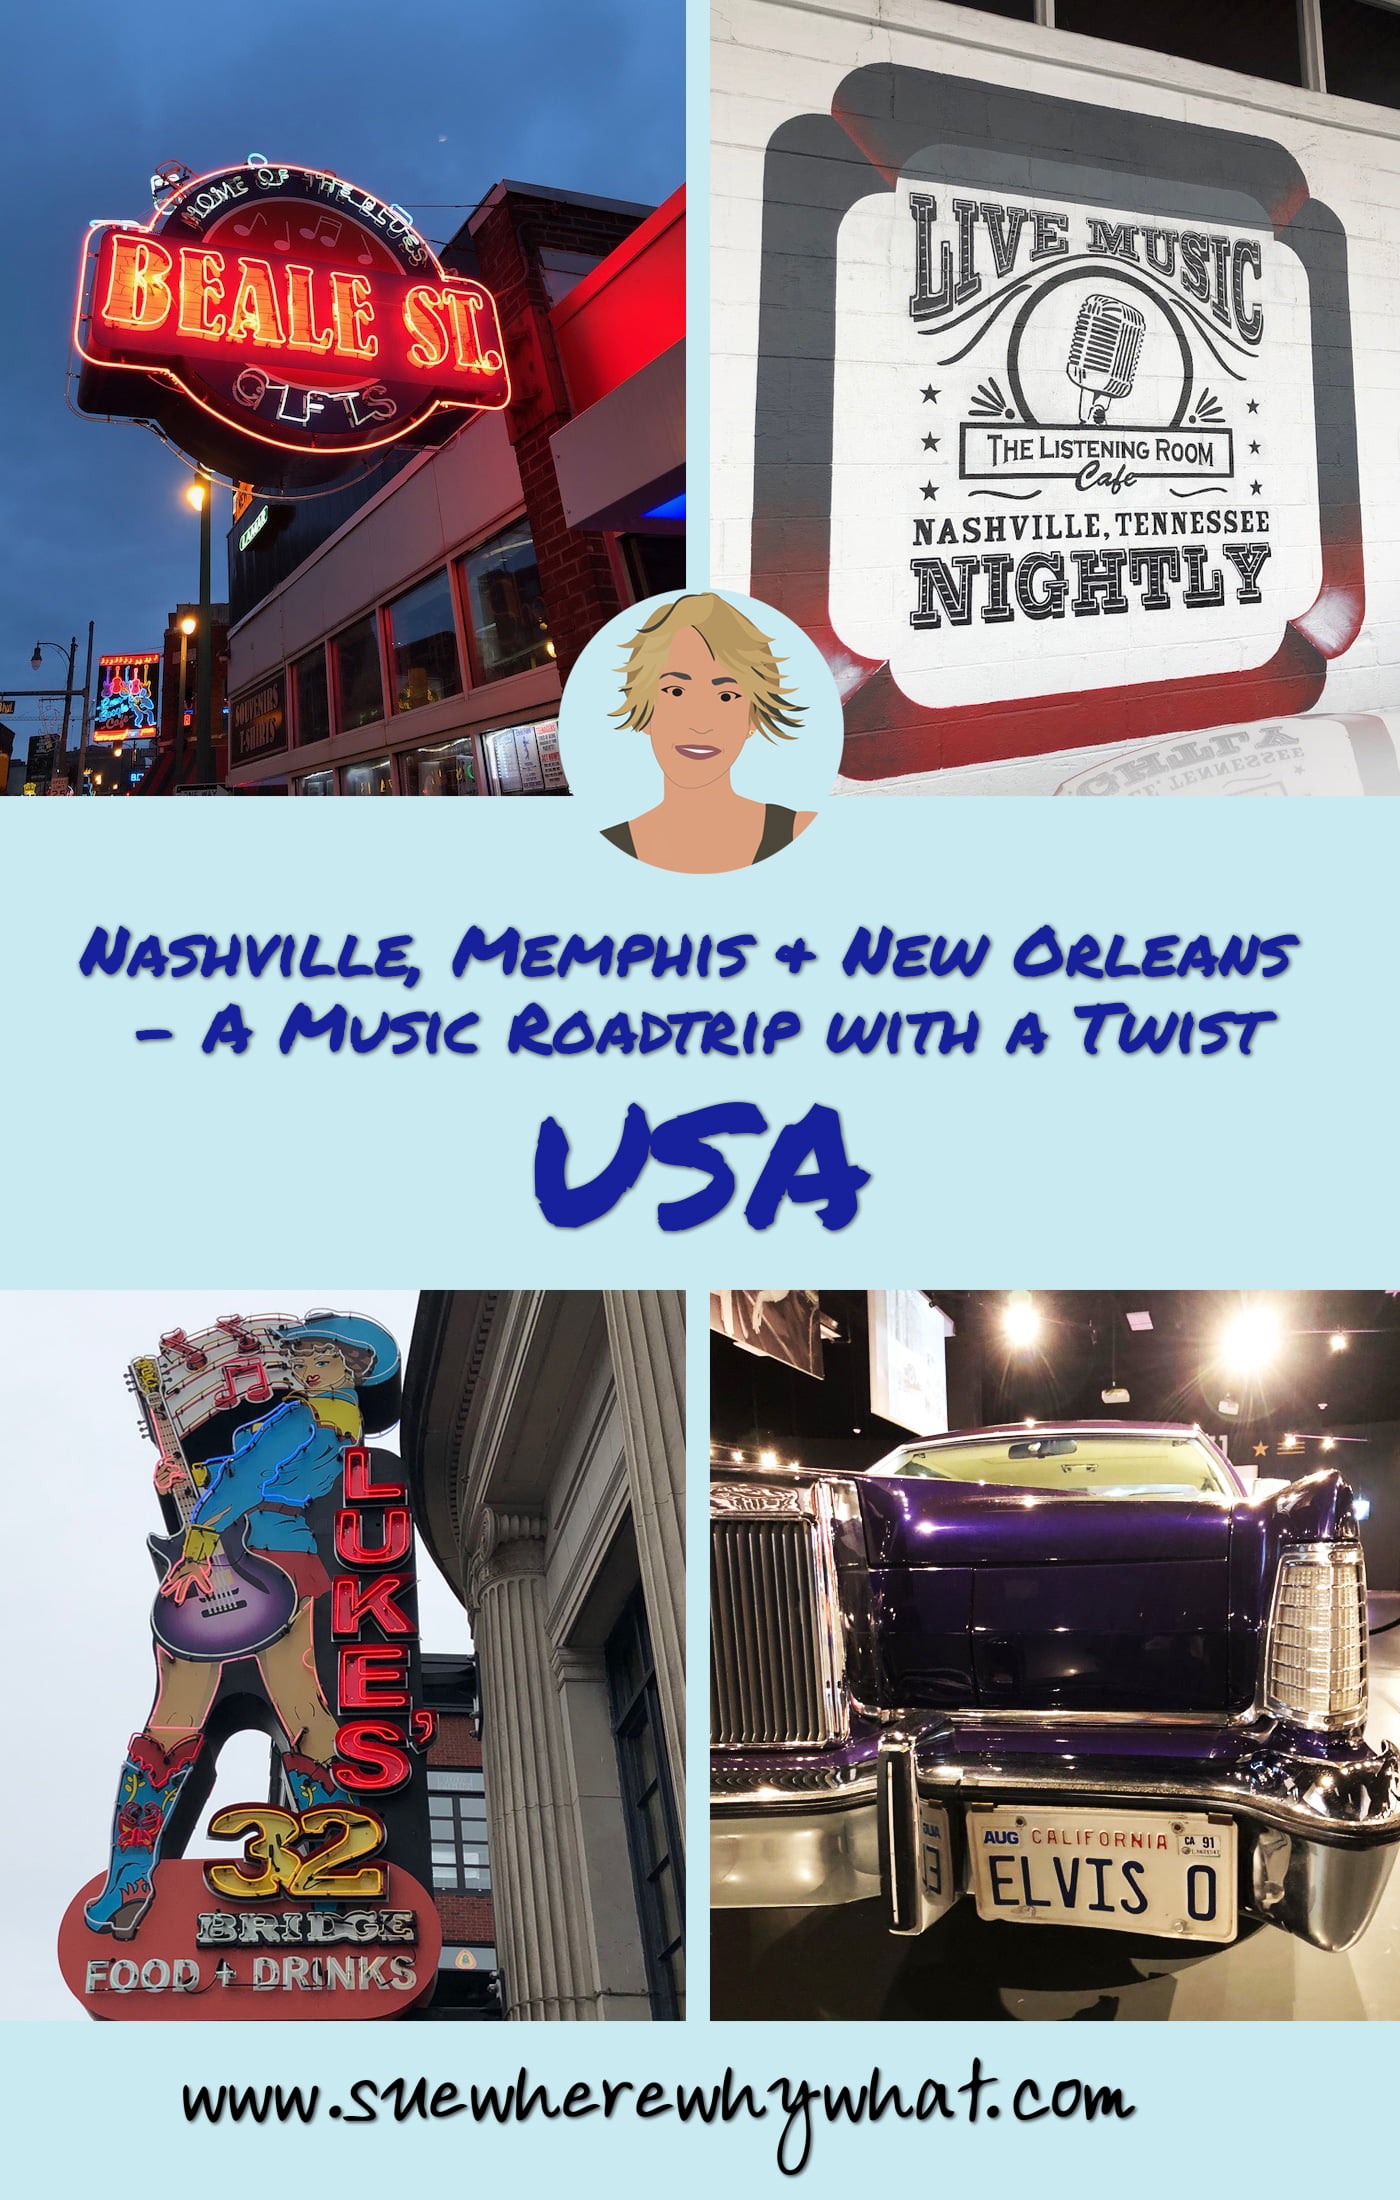 Nashville, Memphis & New Orleans - A Music Roadtrip with a Twist